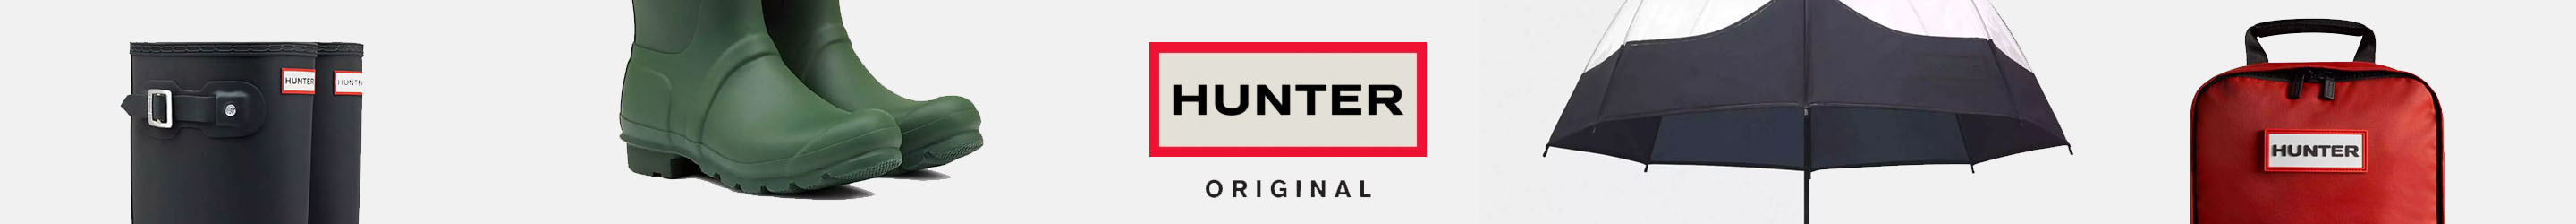 Top banner desktop hunter